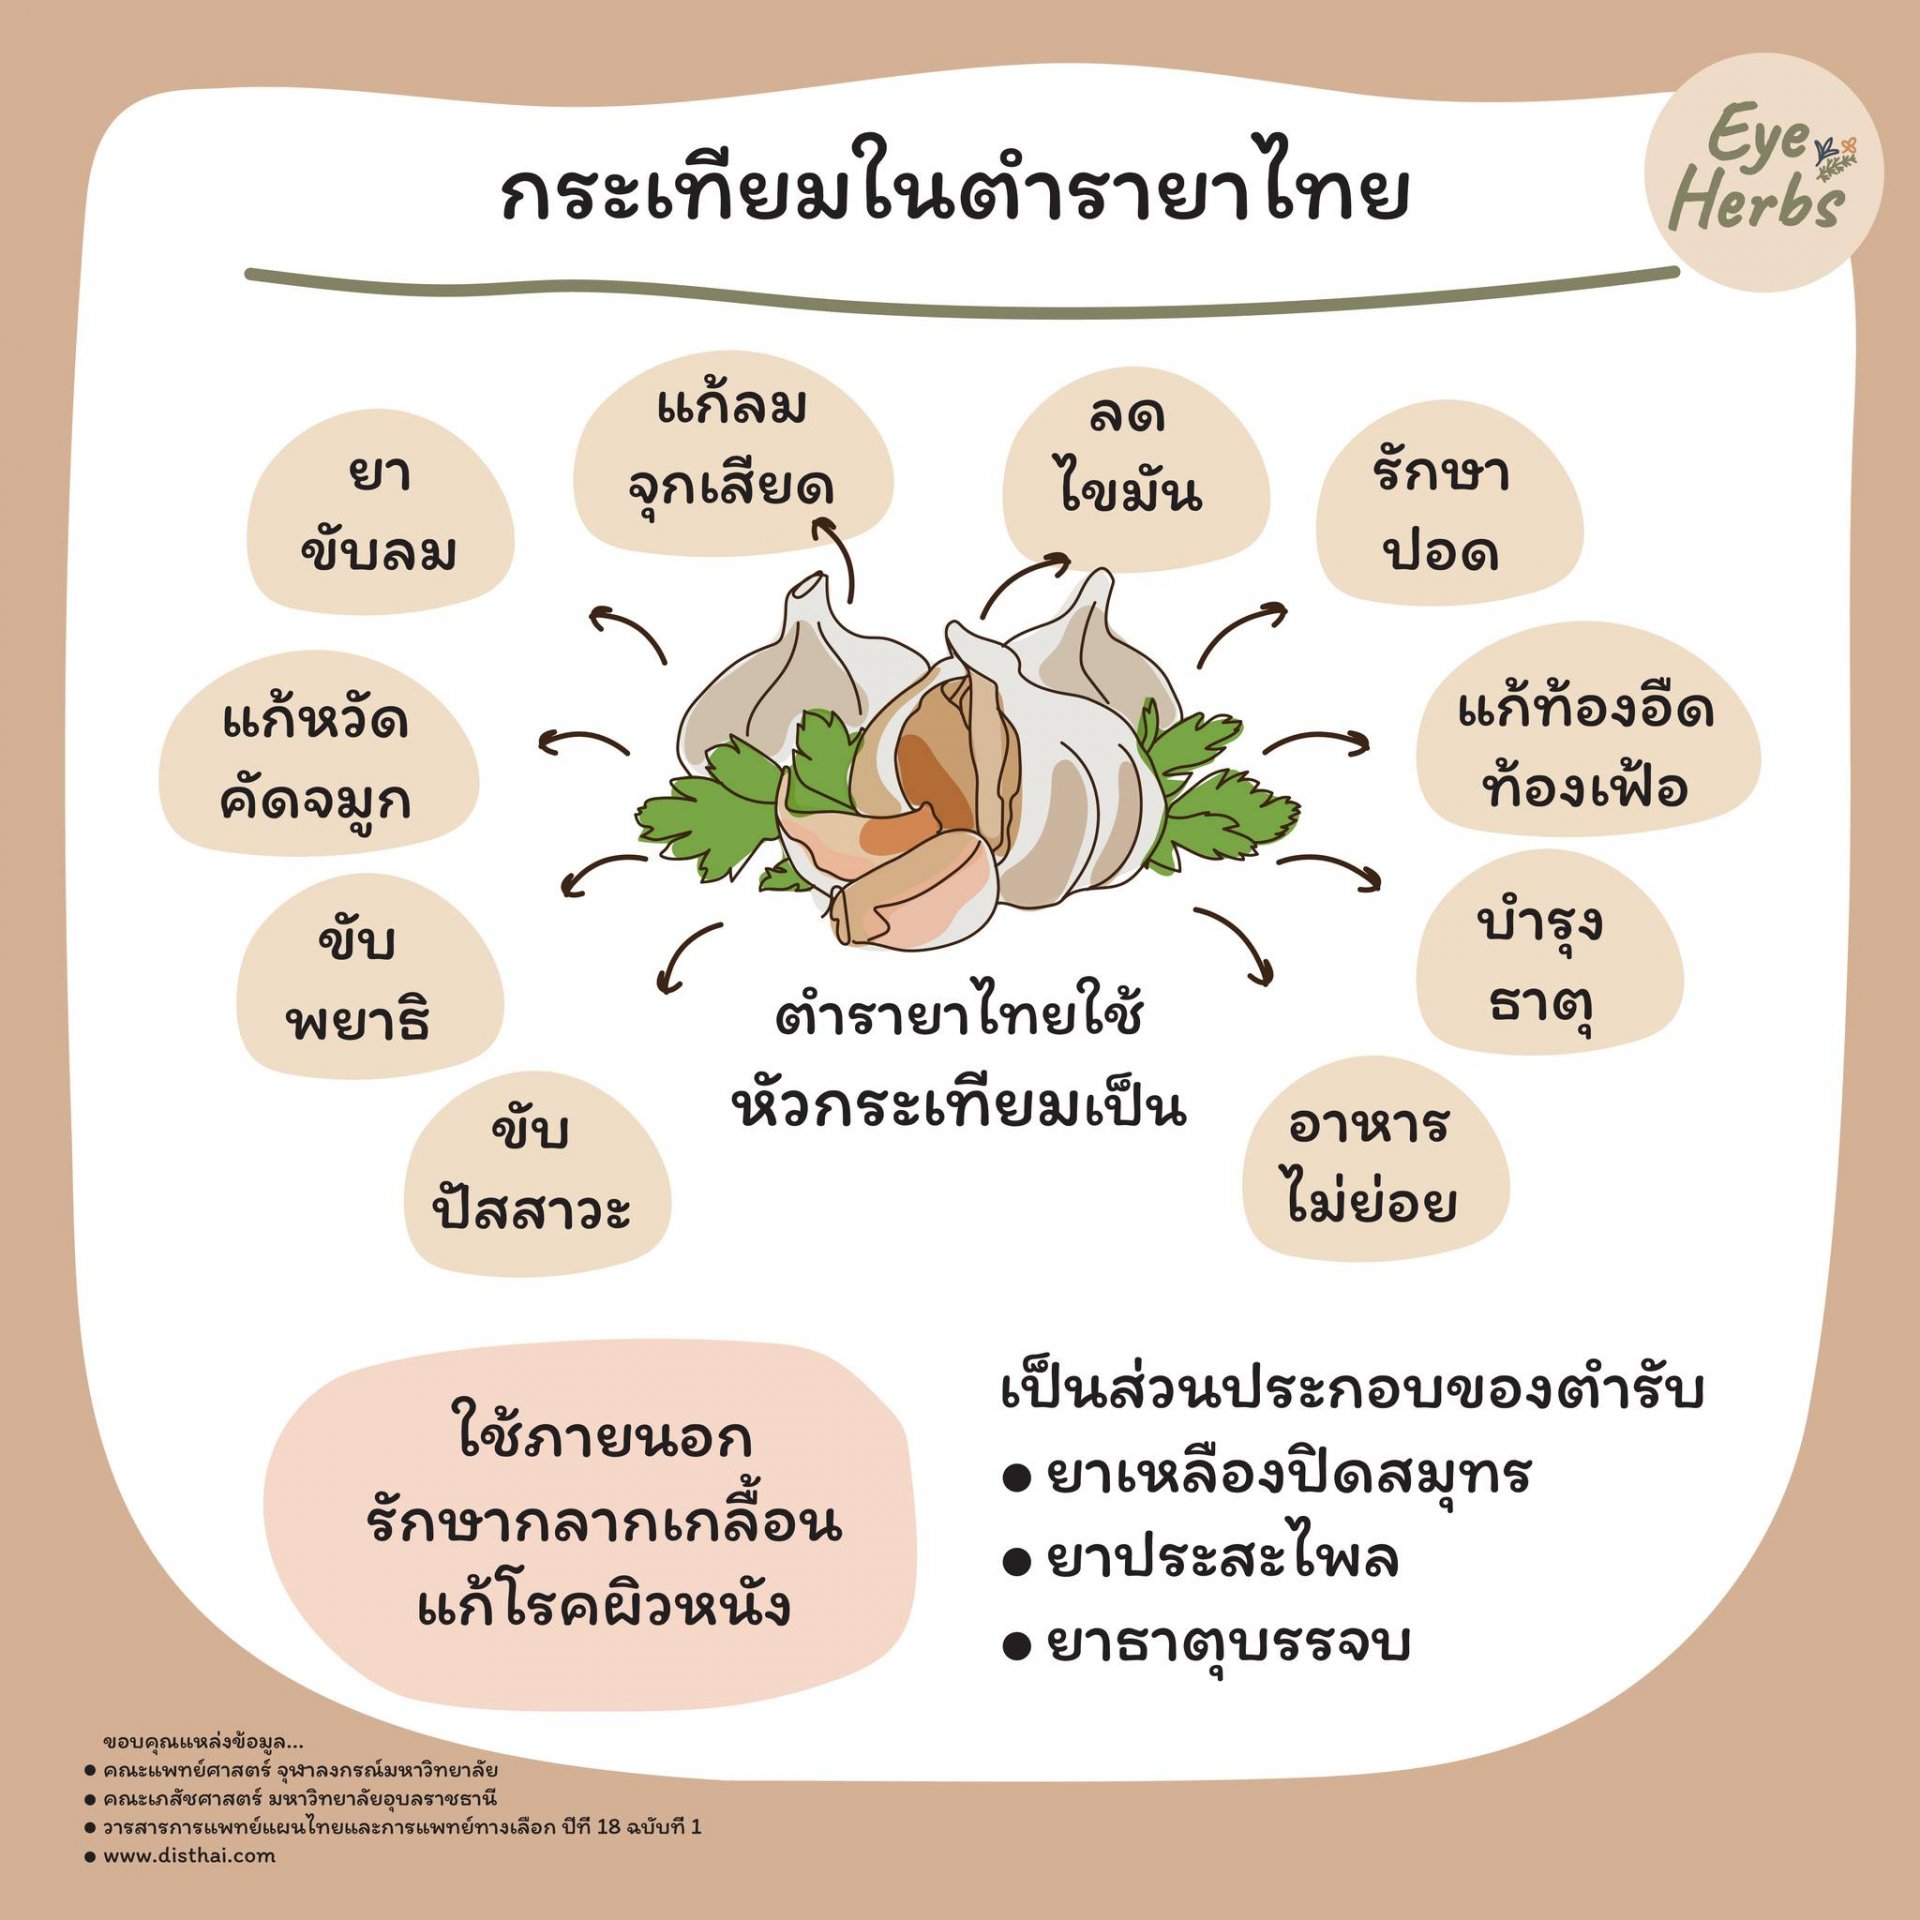 Garlic in Thai medicine textbooks